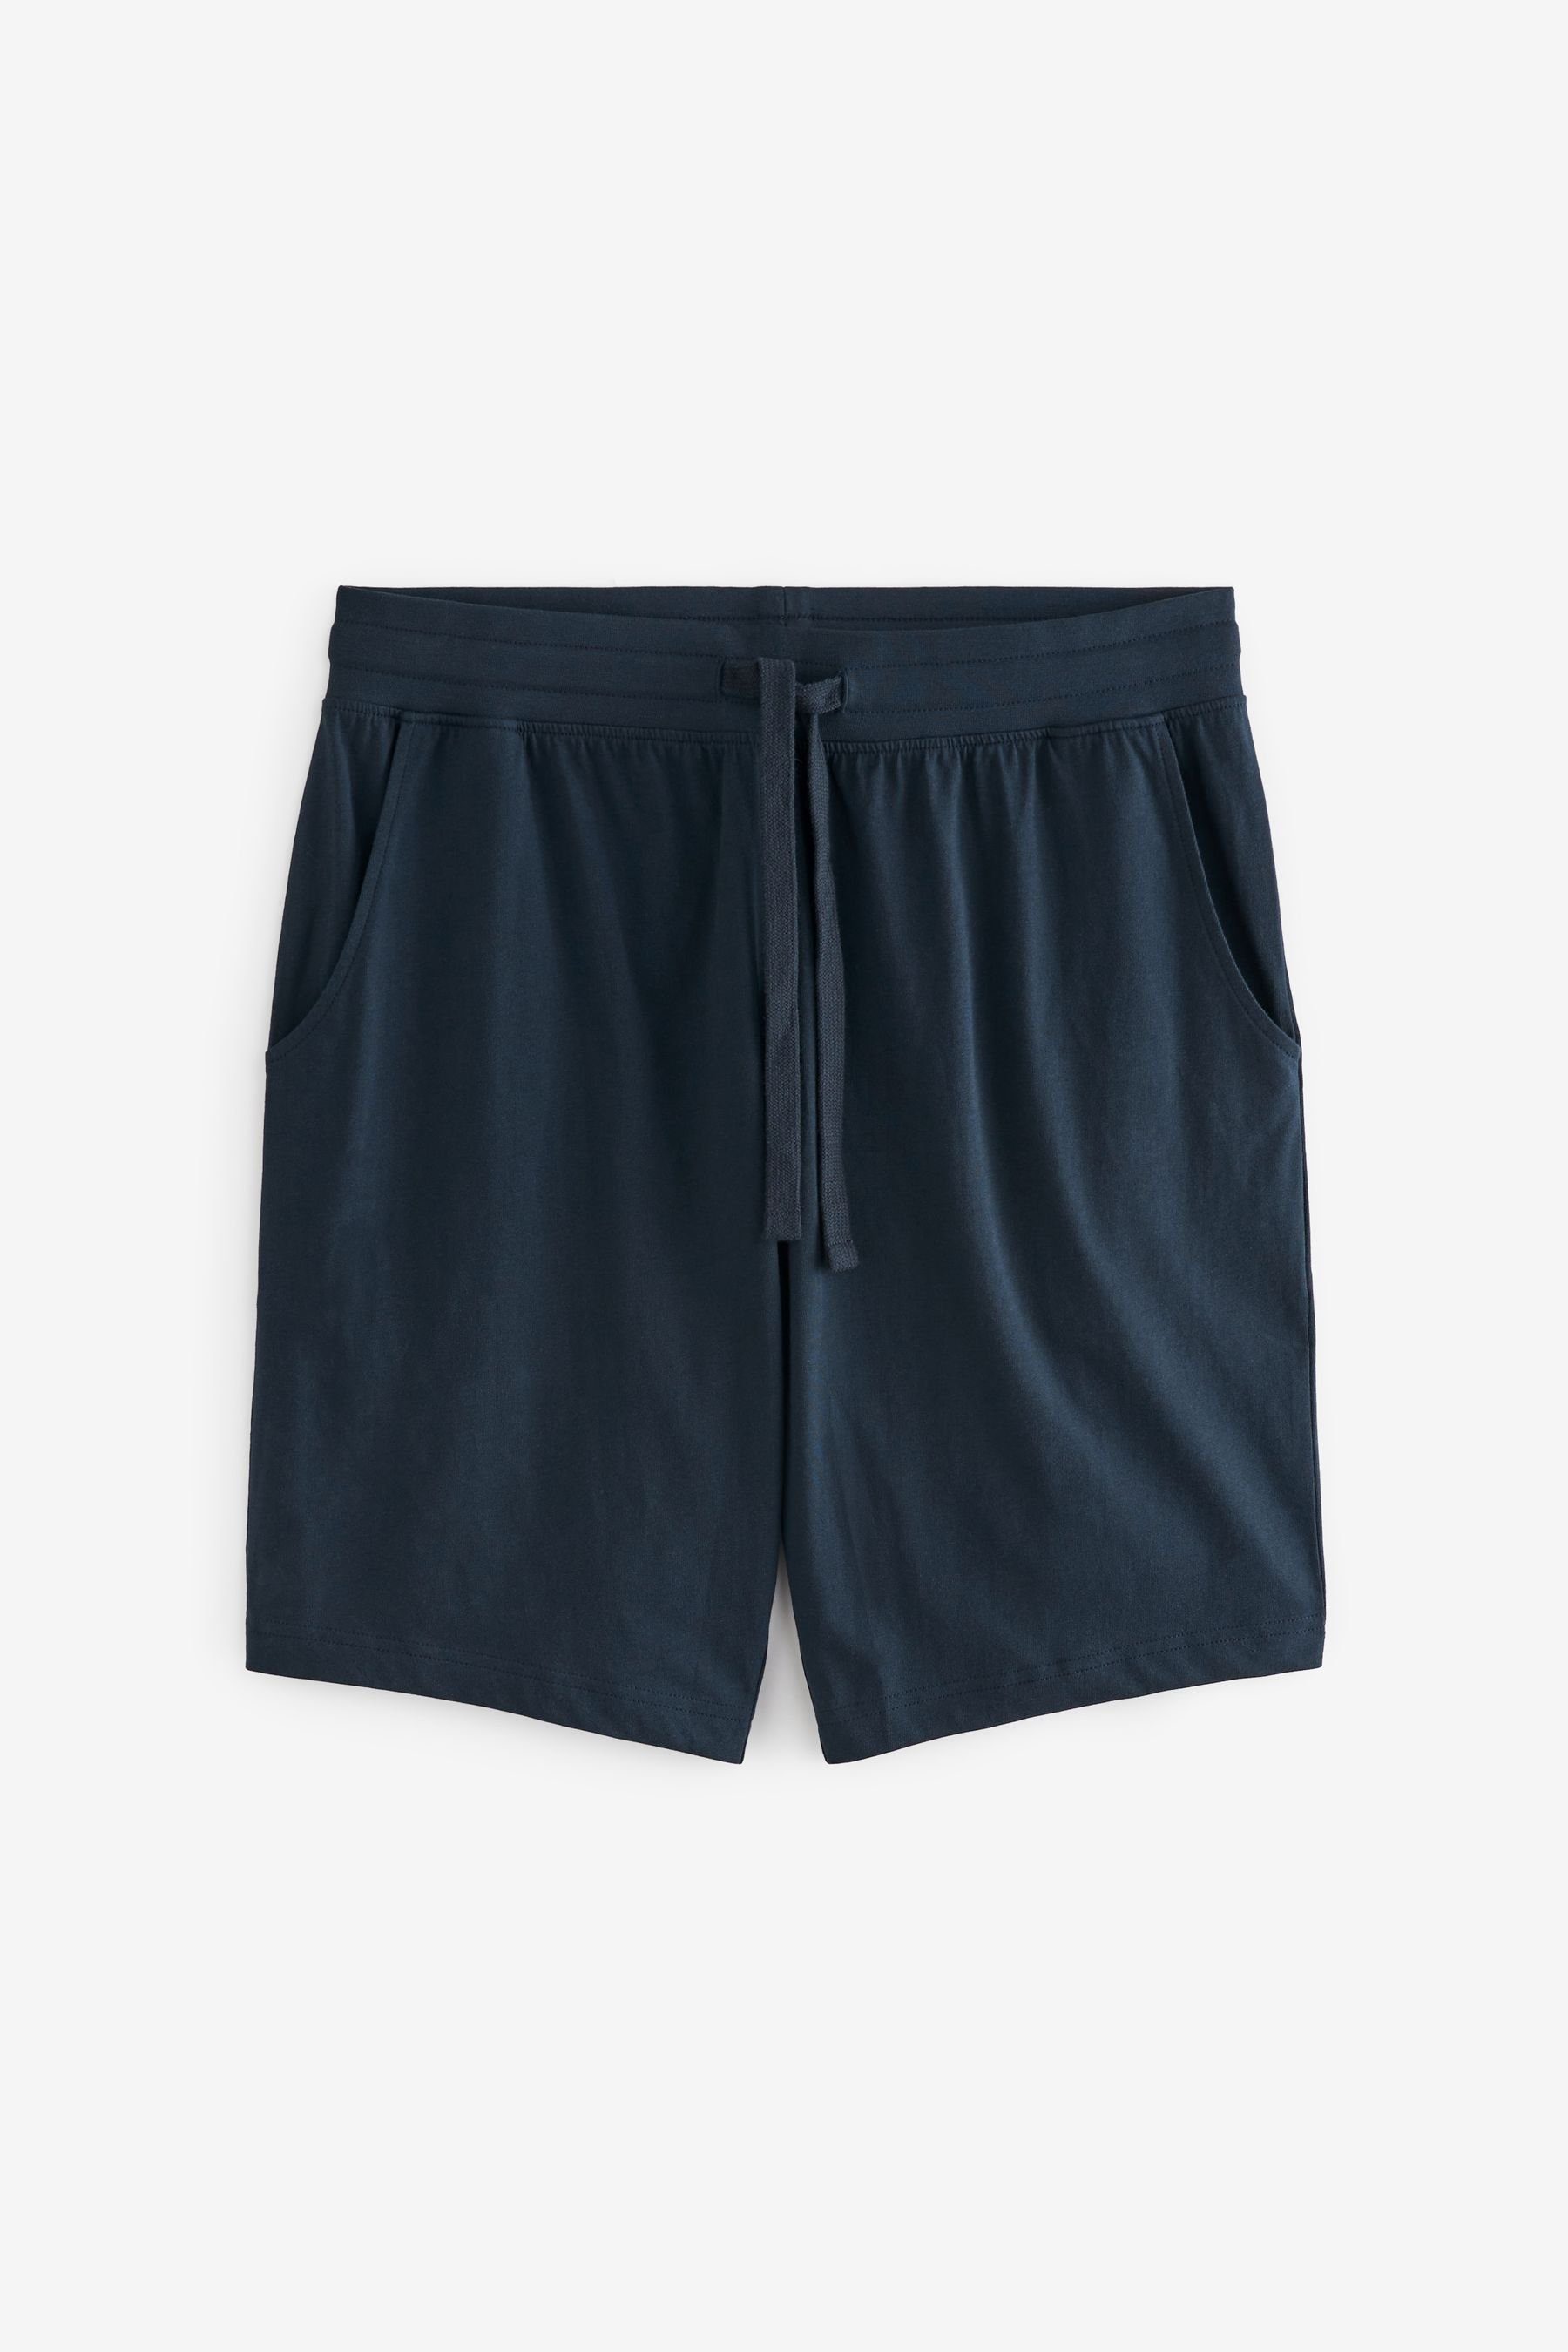 tlg) Shorts (2 Pyjama Next Jersey-Schlafanzug mit